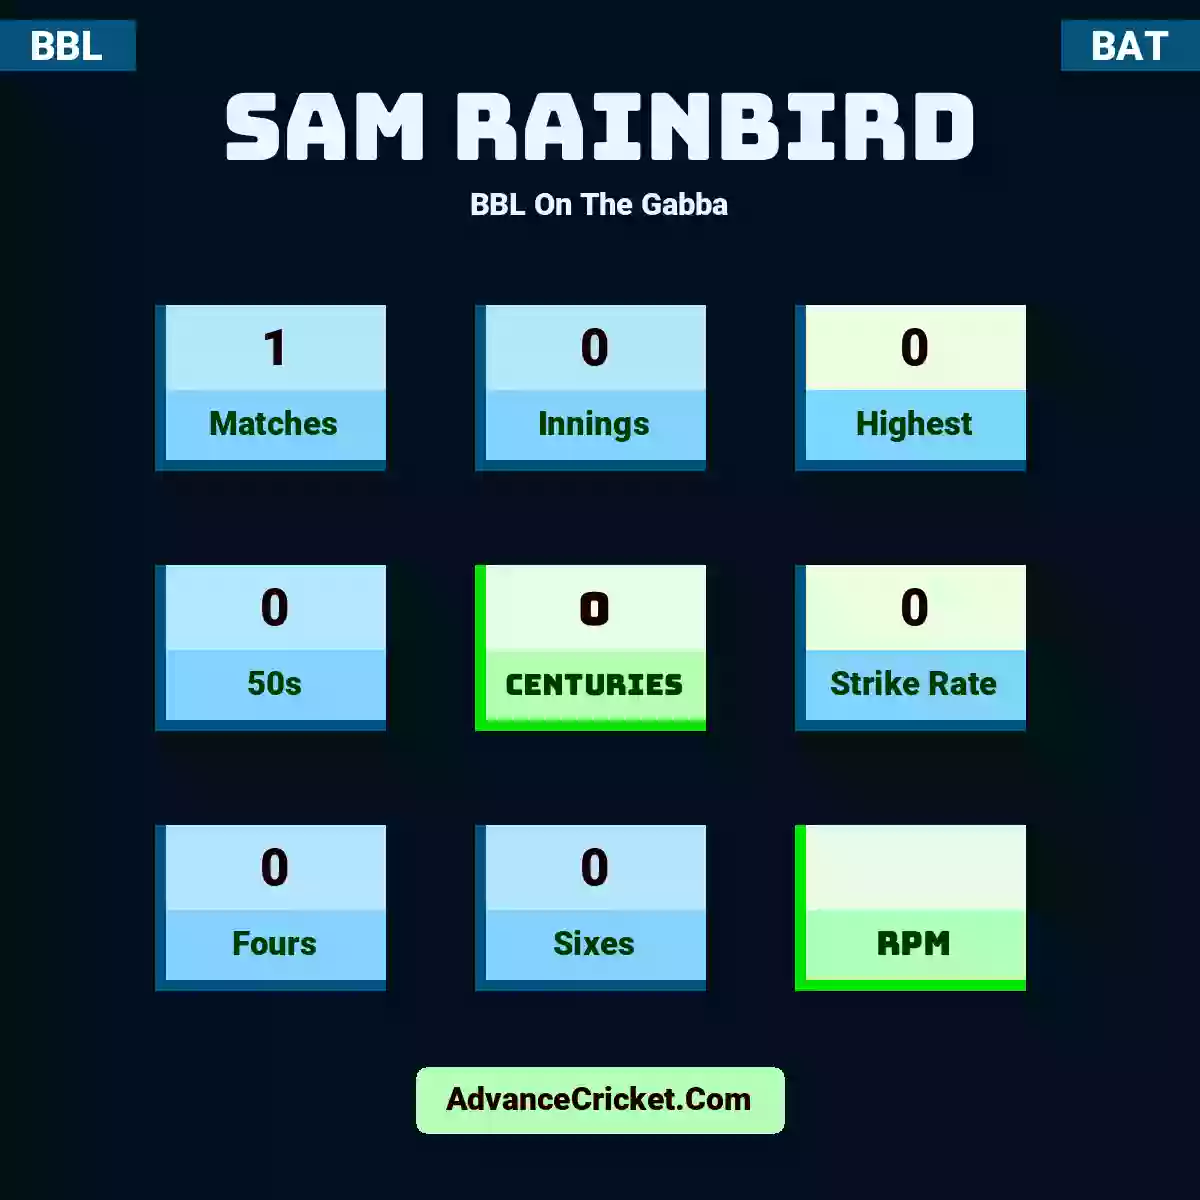 Sam Rainbird BBL  On The Gabba, Sam Rainbird played 1 matches, scored 0 runs as highest, 0 half-centuries, and 0 centuries, with a strike rate of 0. S.Rainbird hit 0 fours and 0 sixes.